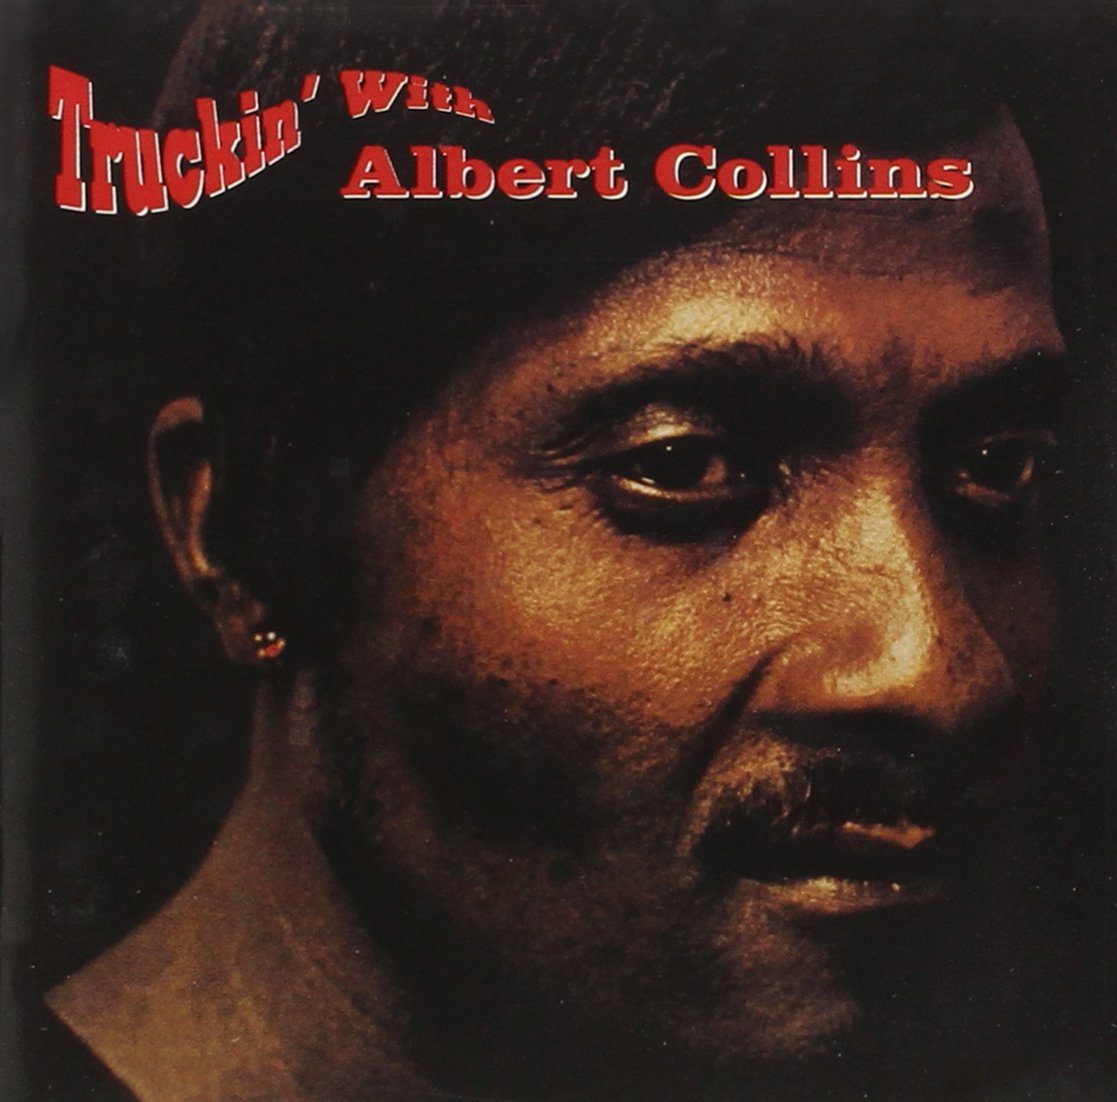 Albert Collins- Truckin' With Albert Collins - Darkside Records